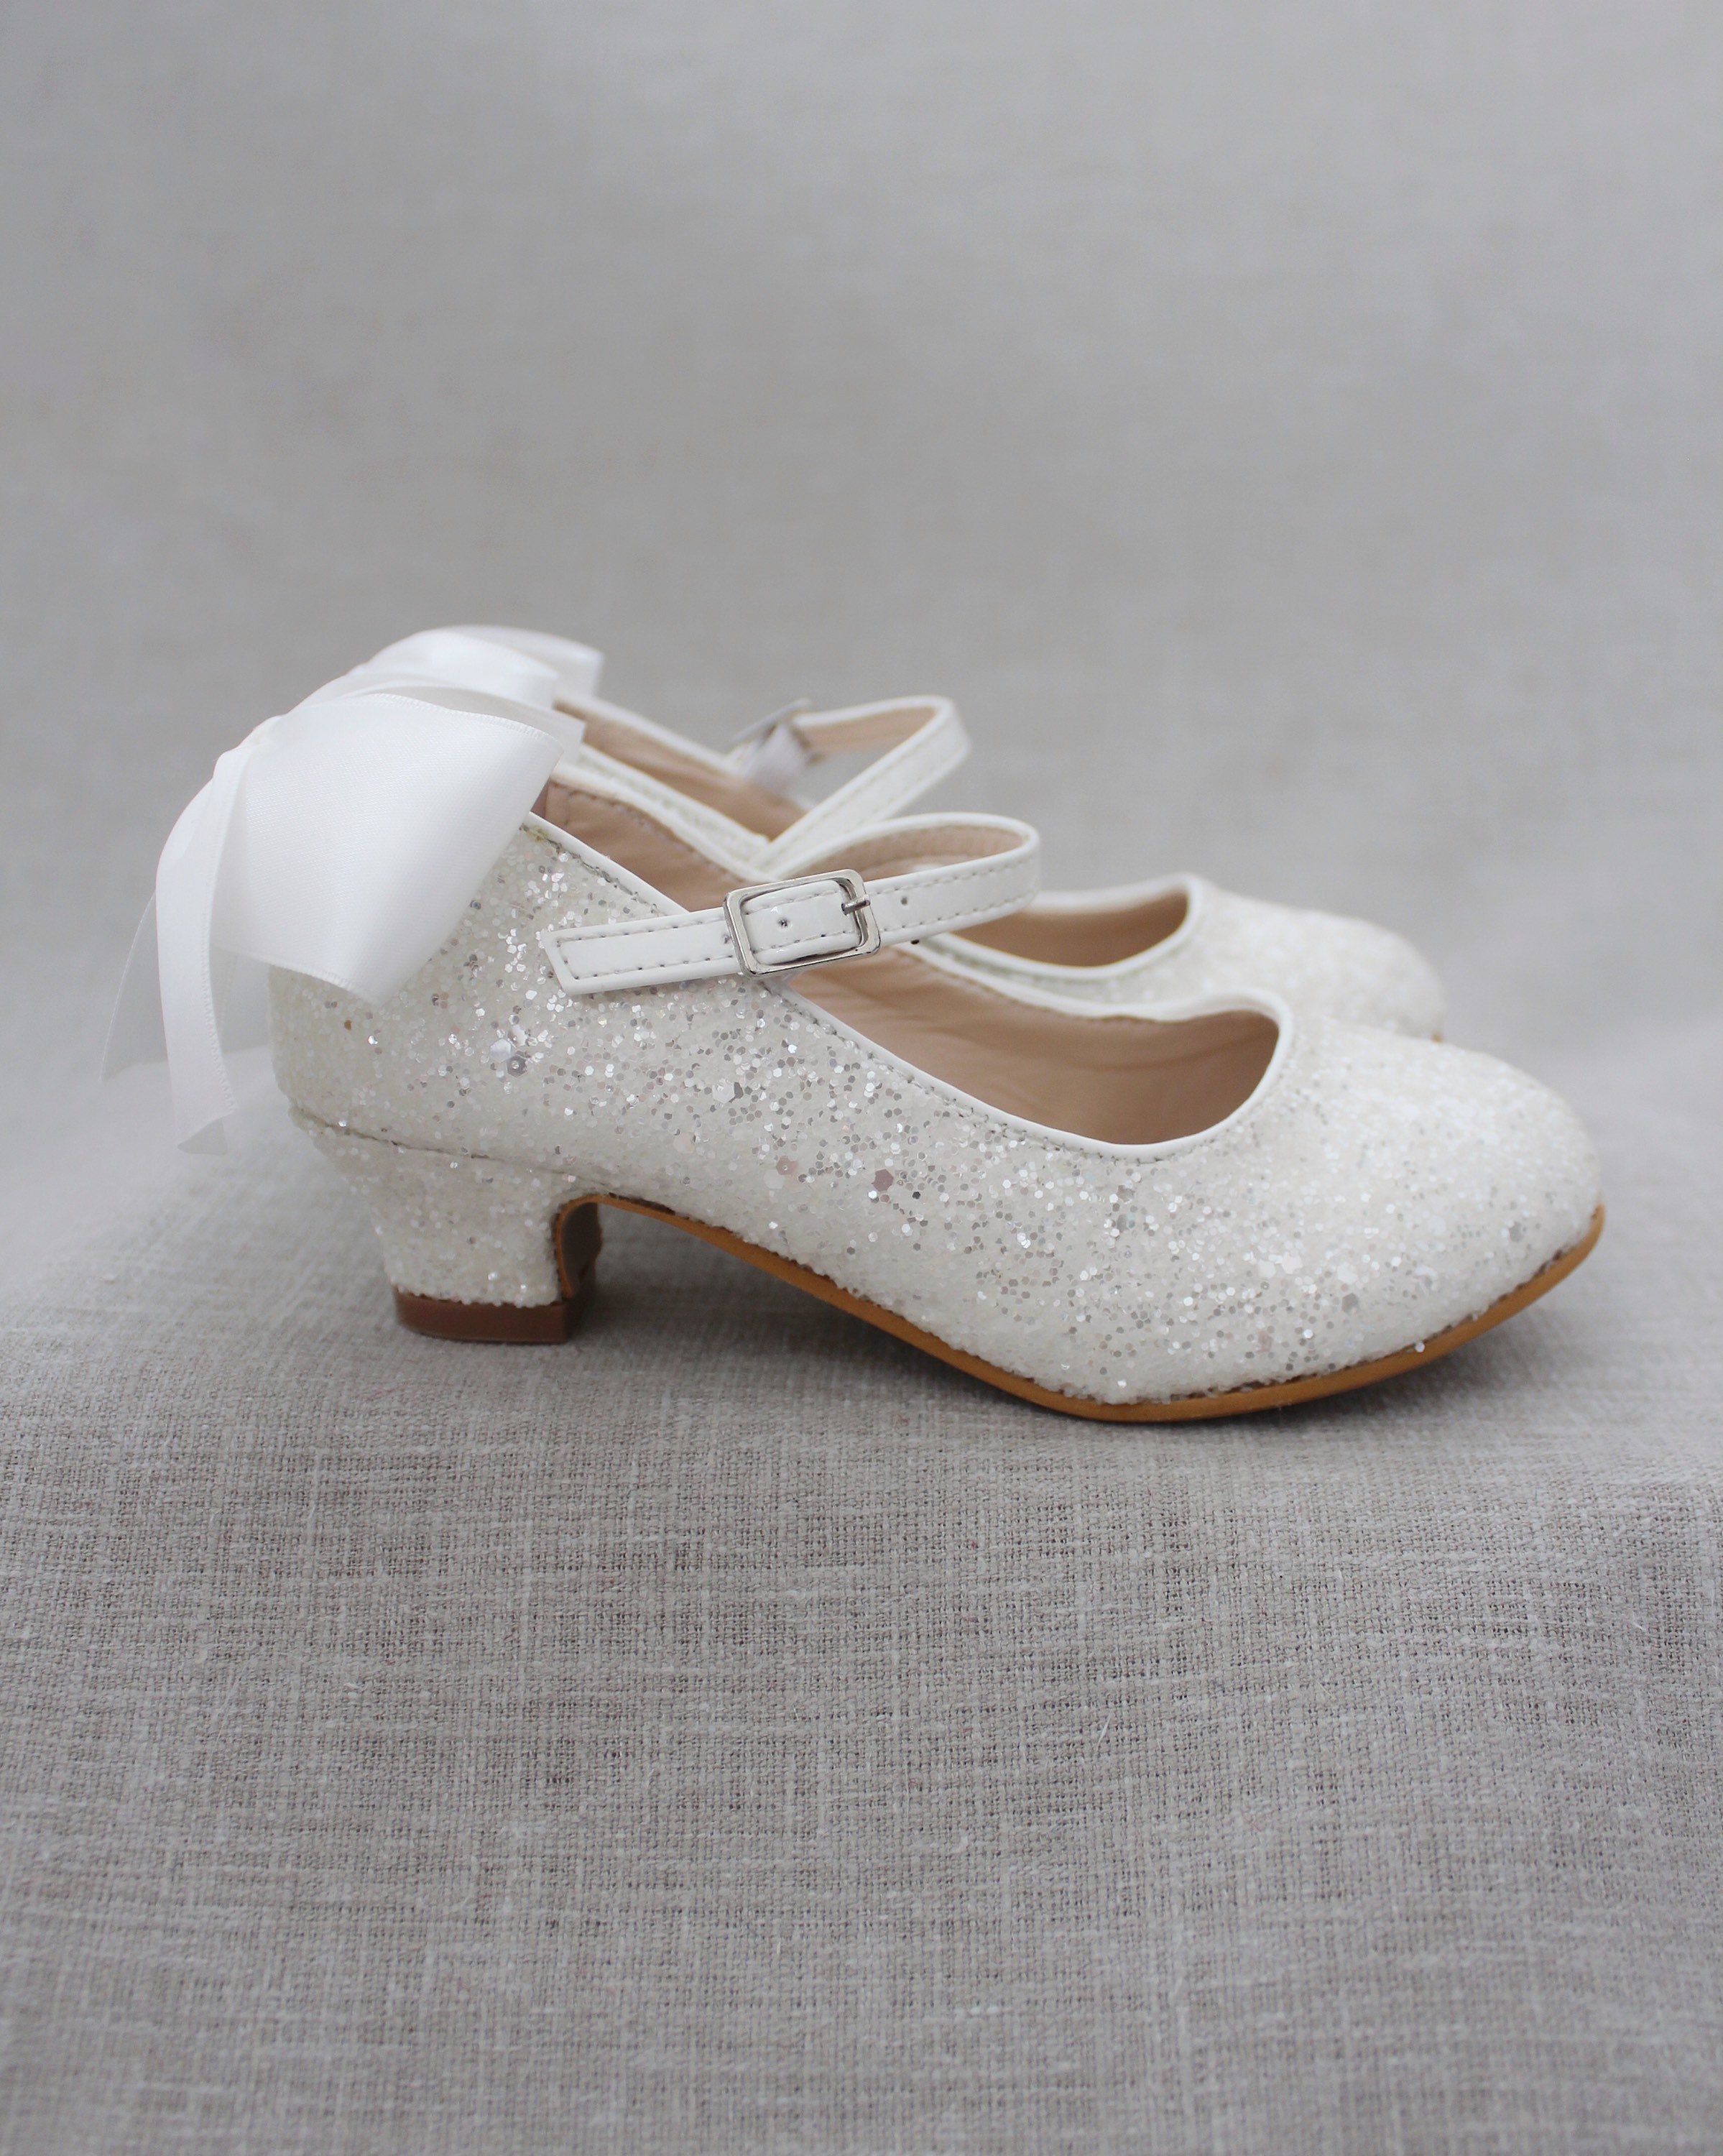 Girls/Sandals/Heeled Dress Sandals - SHOE BARGAIN WAREHOUSE  (WWW.SBWSHOES.COM)